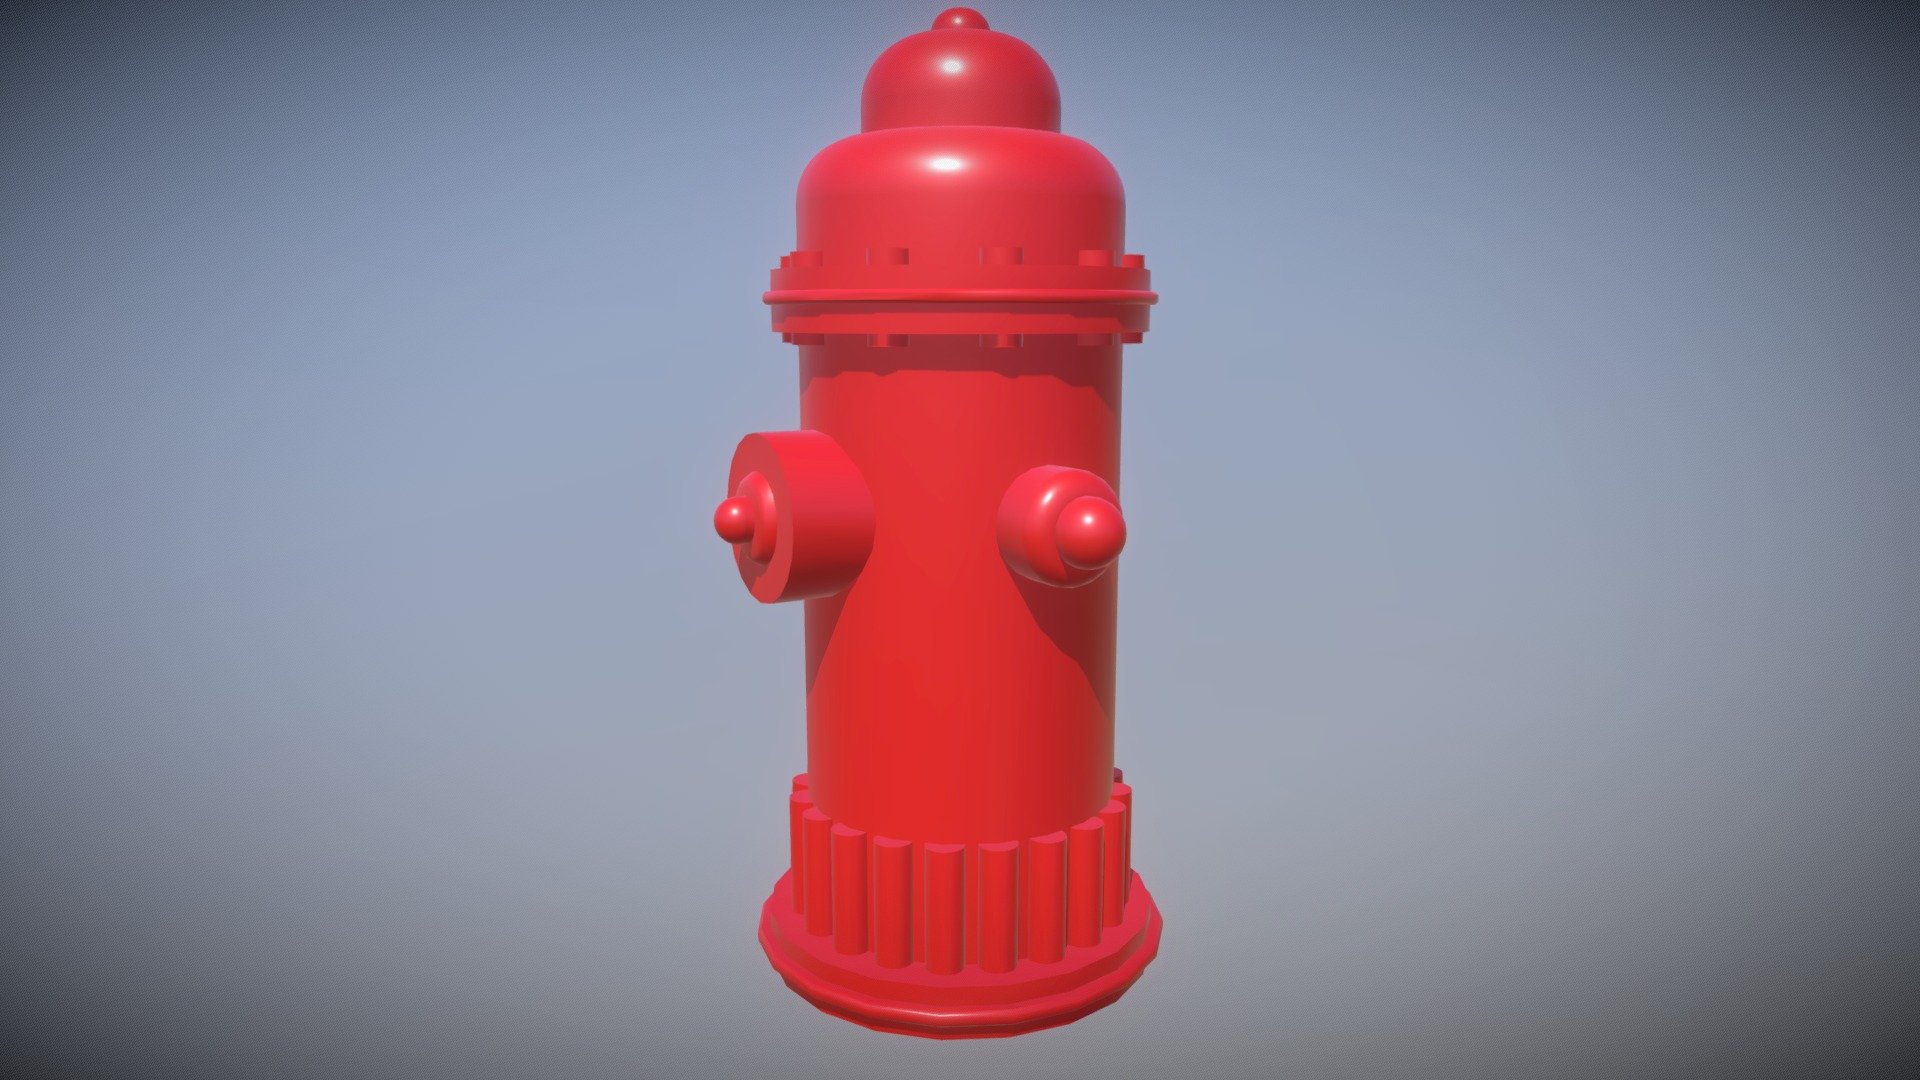 Fire hydrant model